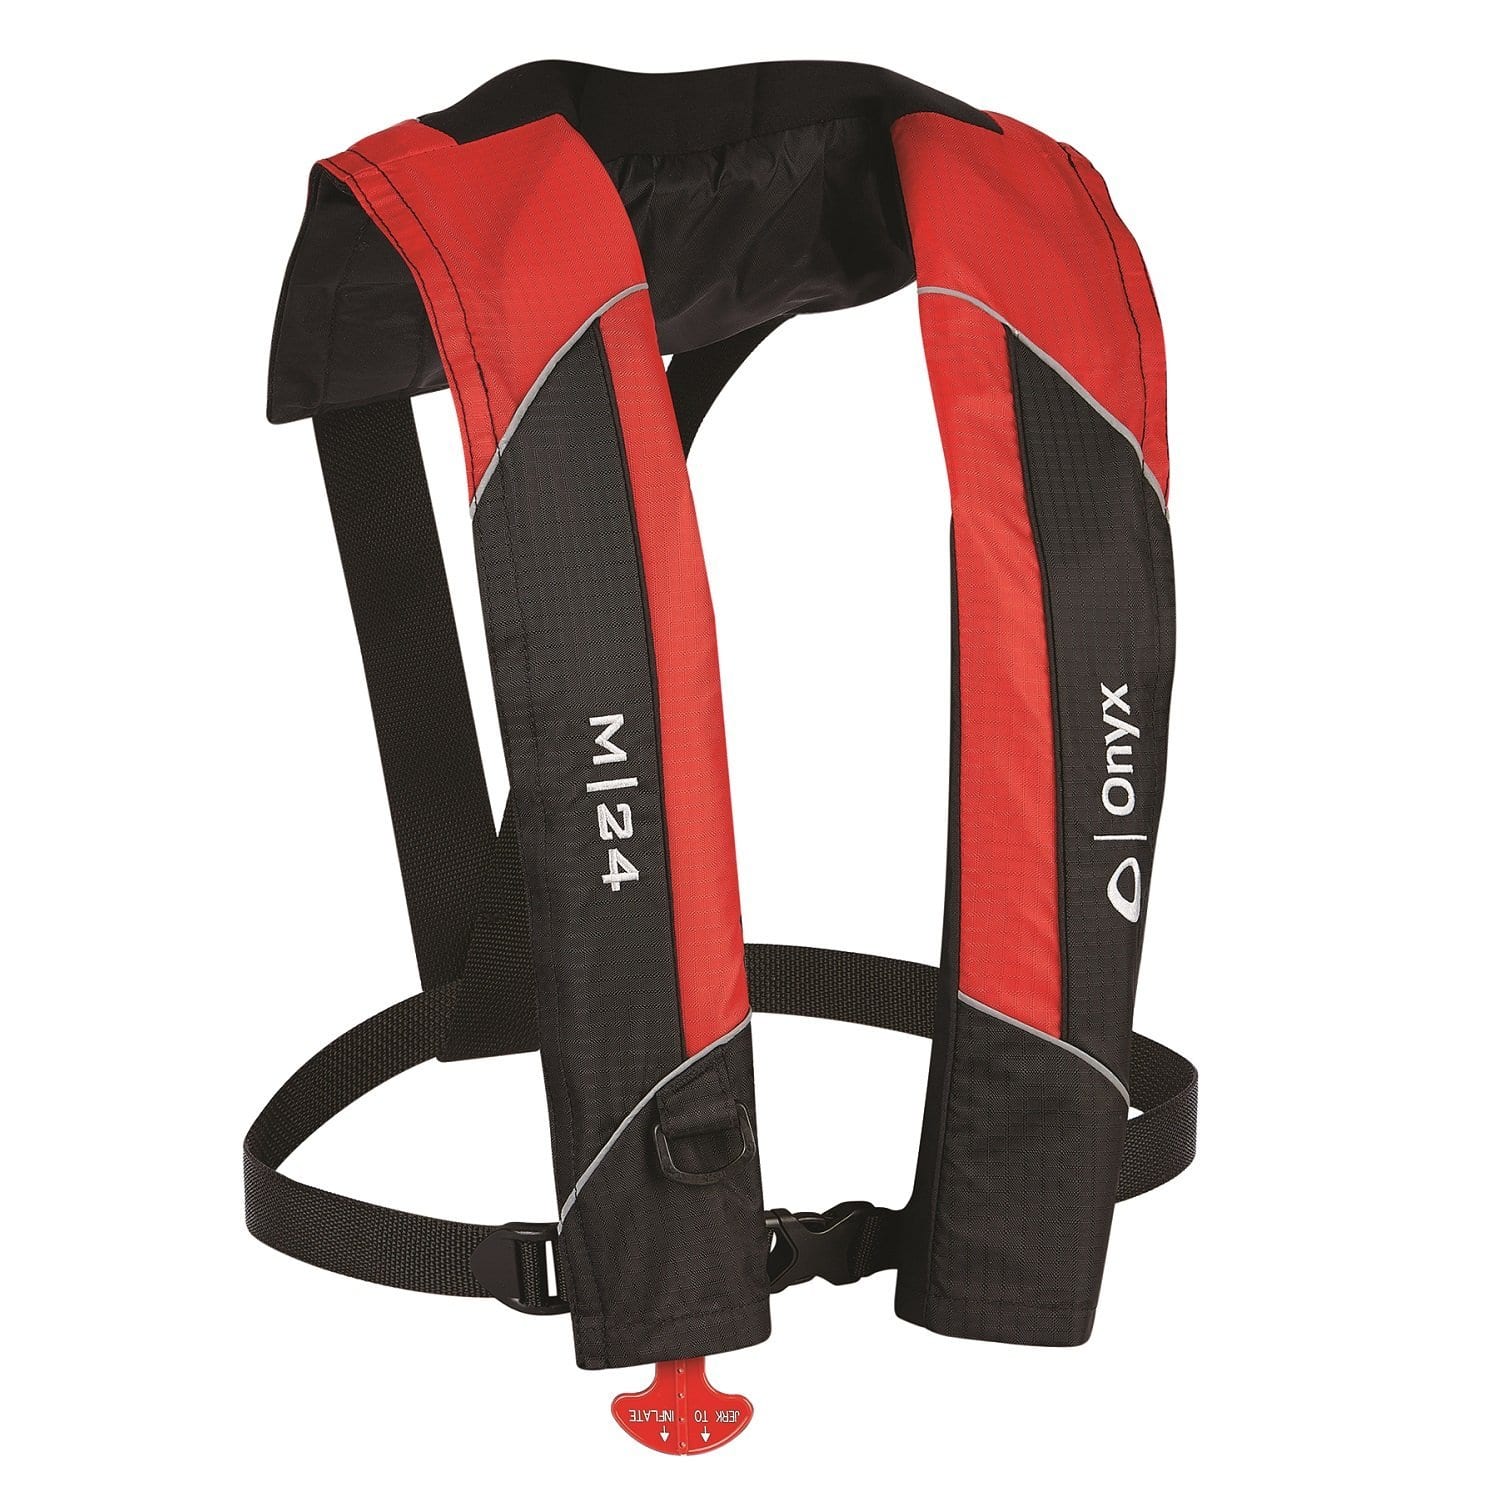 Onyx M-24 Manual Inflatable Lifejacket